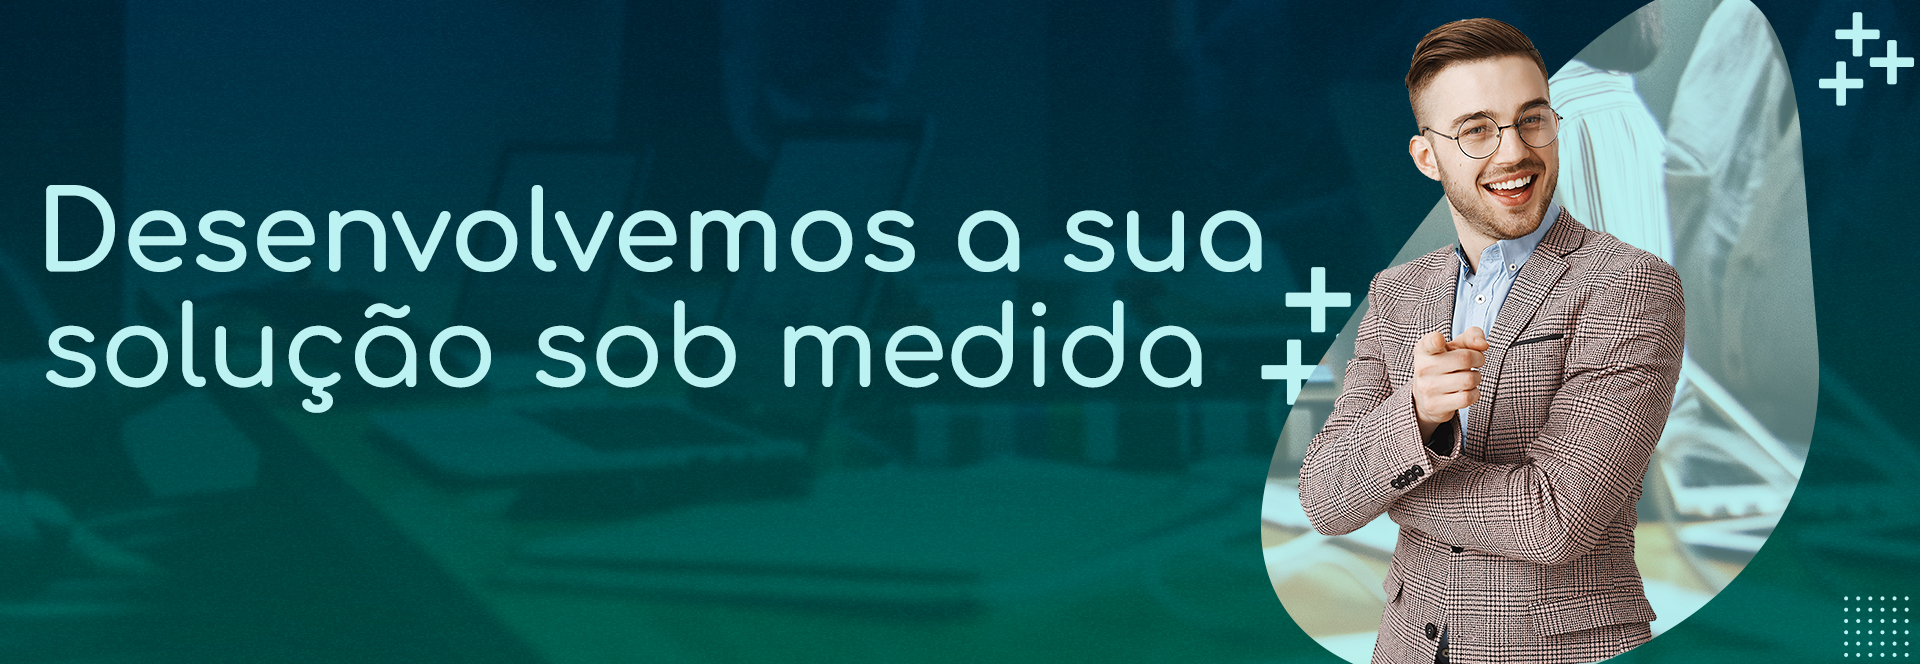 Sob-Medida-banner-mobile